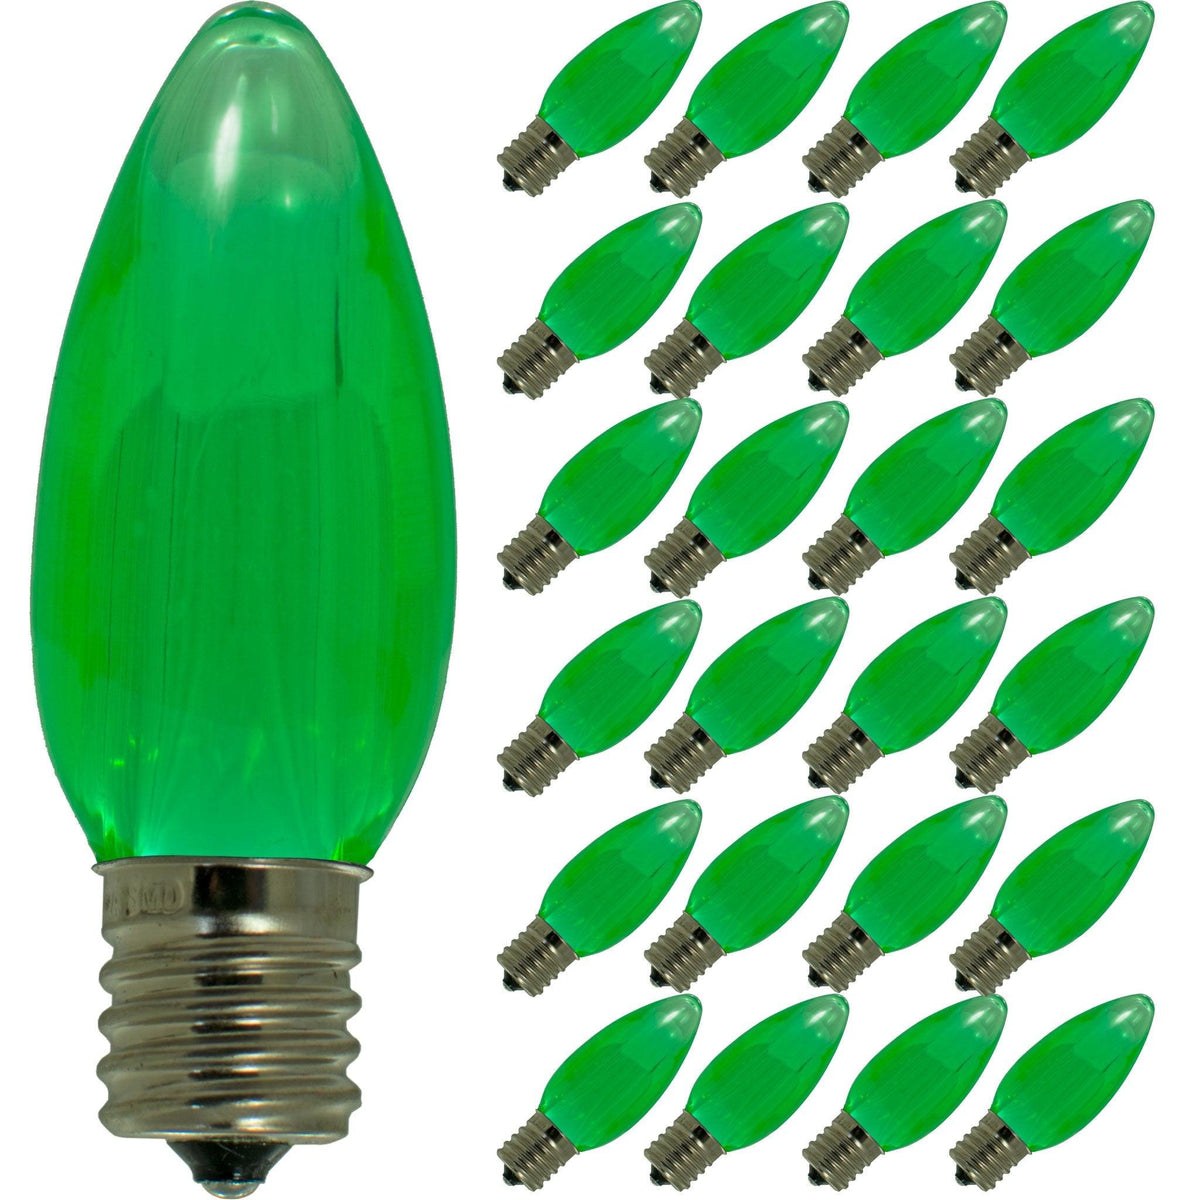 Green LED Light Bulbs - Lee Display